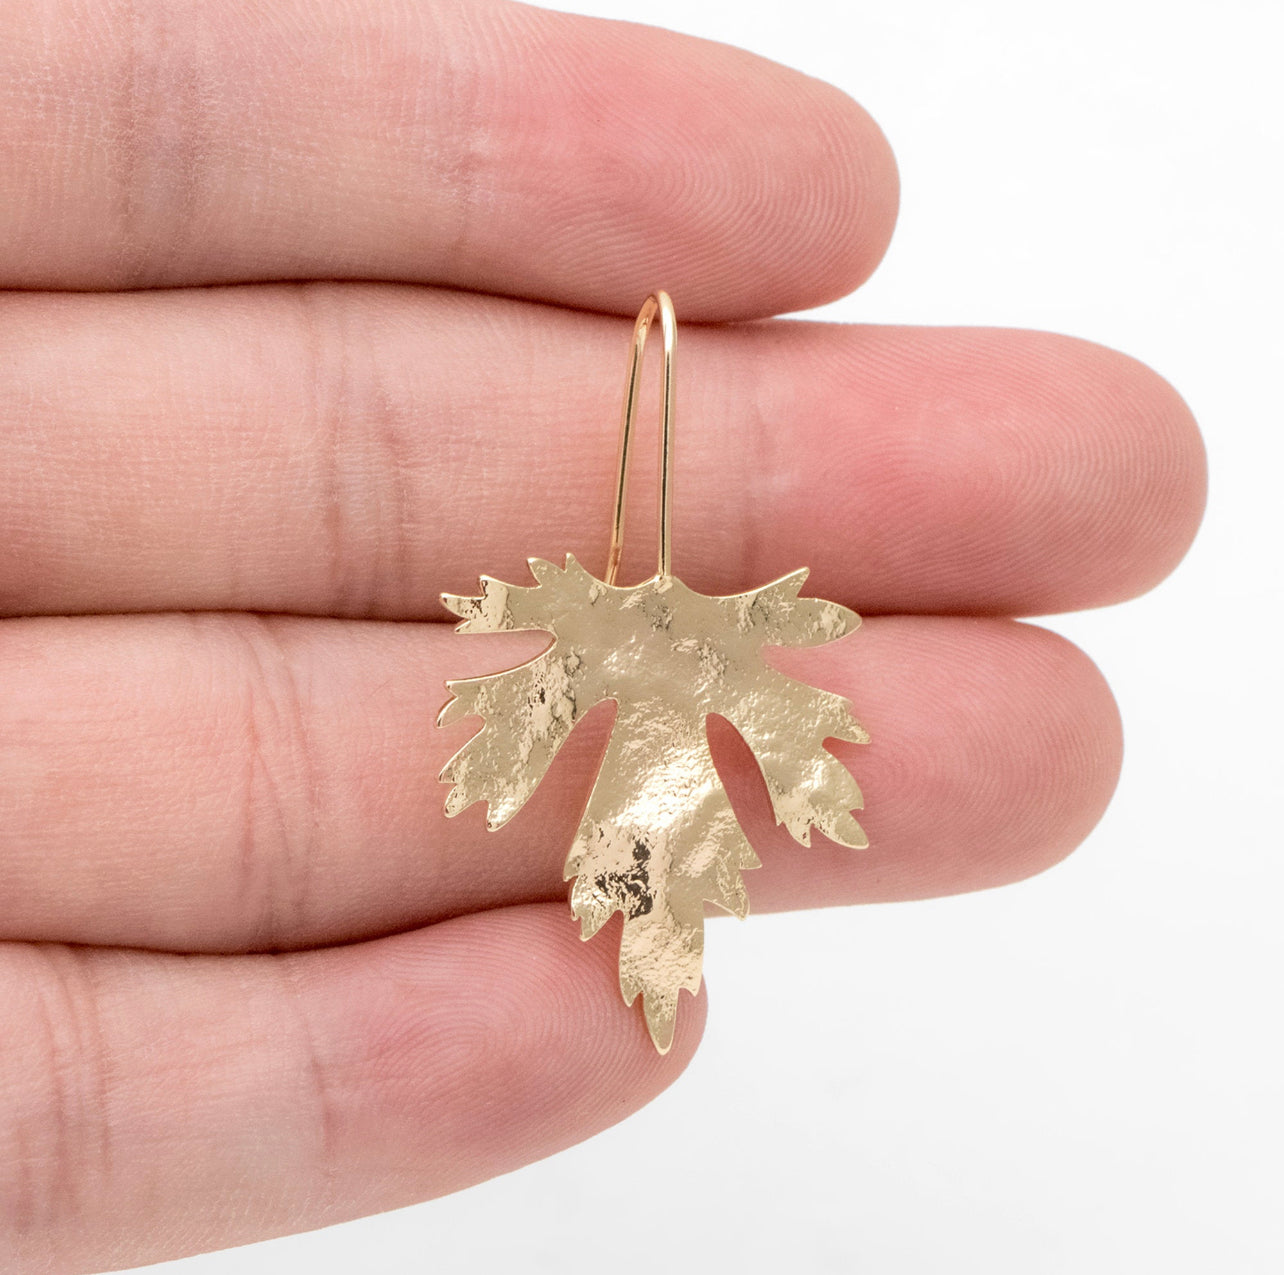 Oh Canada - Maple Leaf Earrings